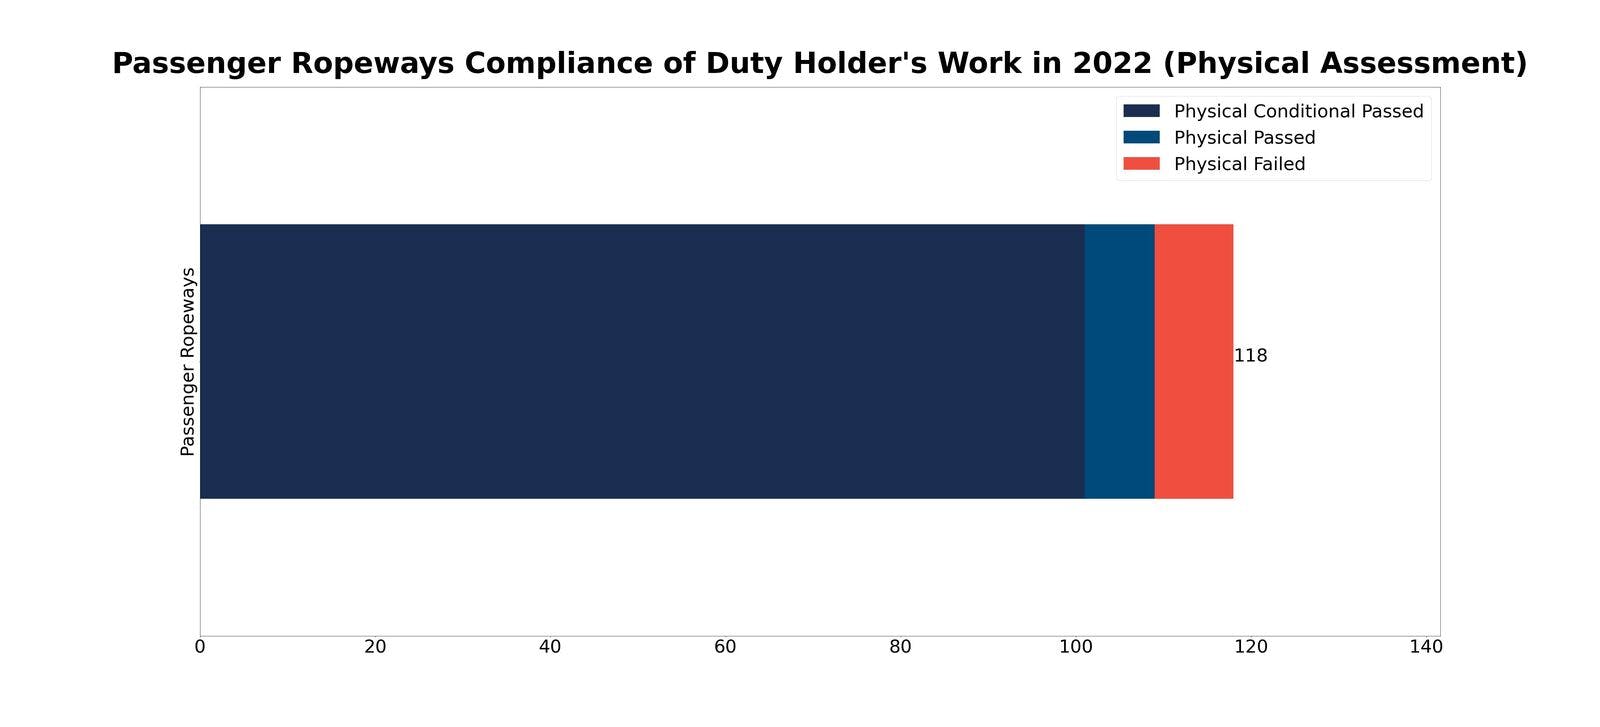 Passenger-Ropeways-Compliance-Duty-Holder-Work-2022-Physical-Assessment.jpg